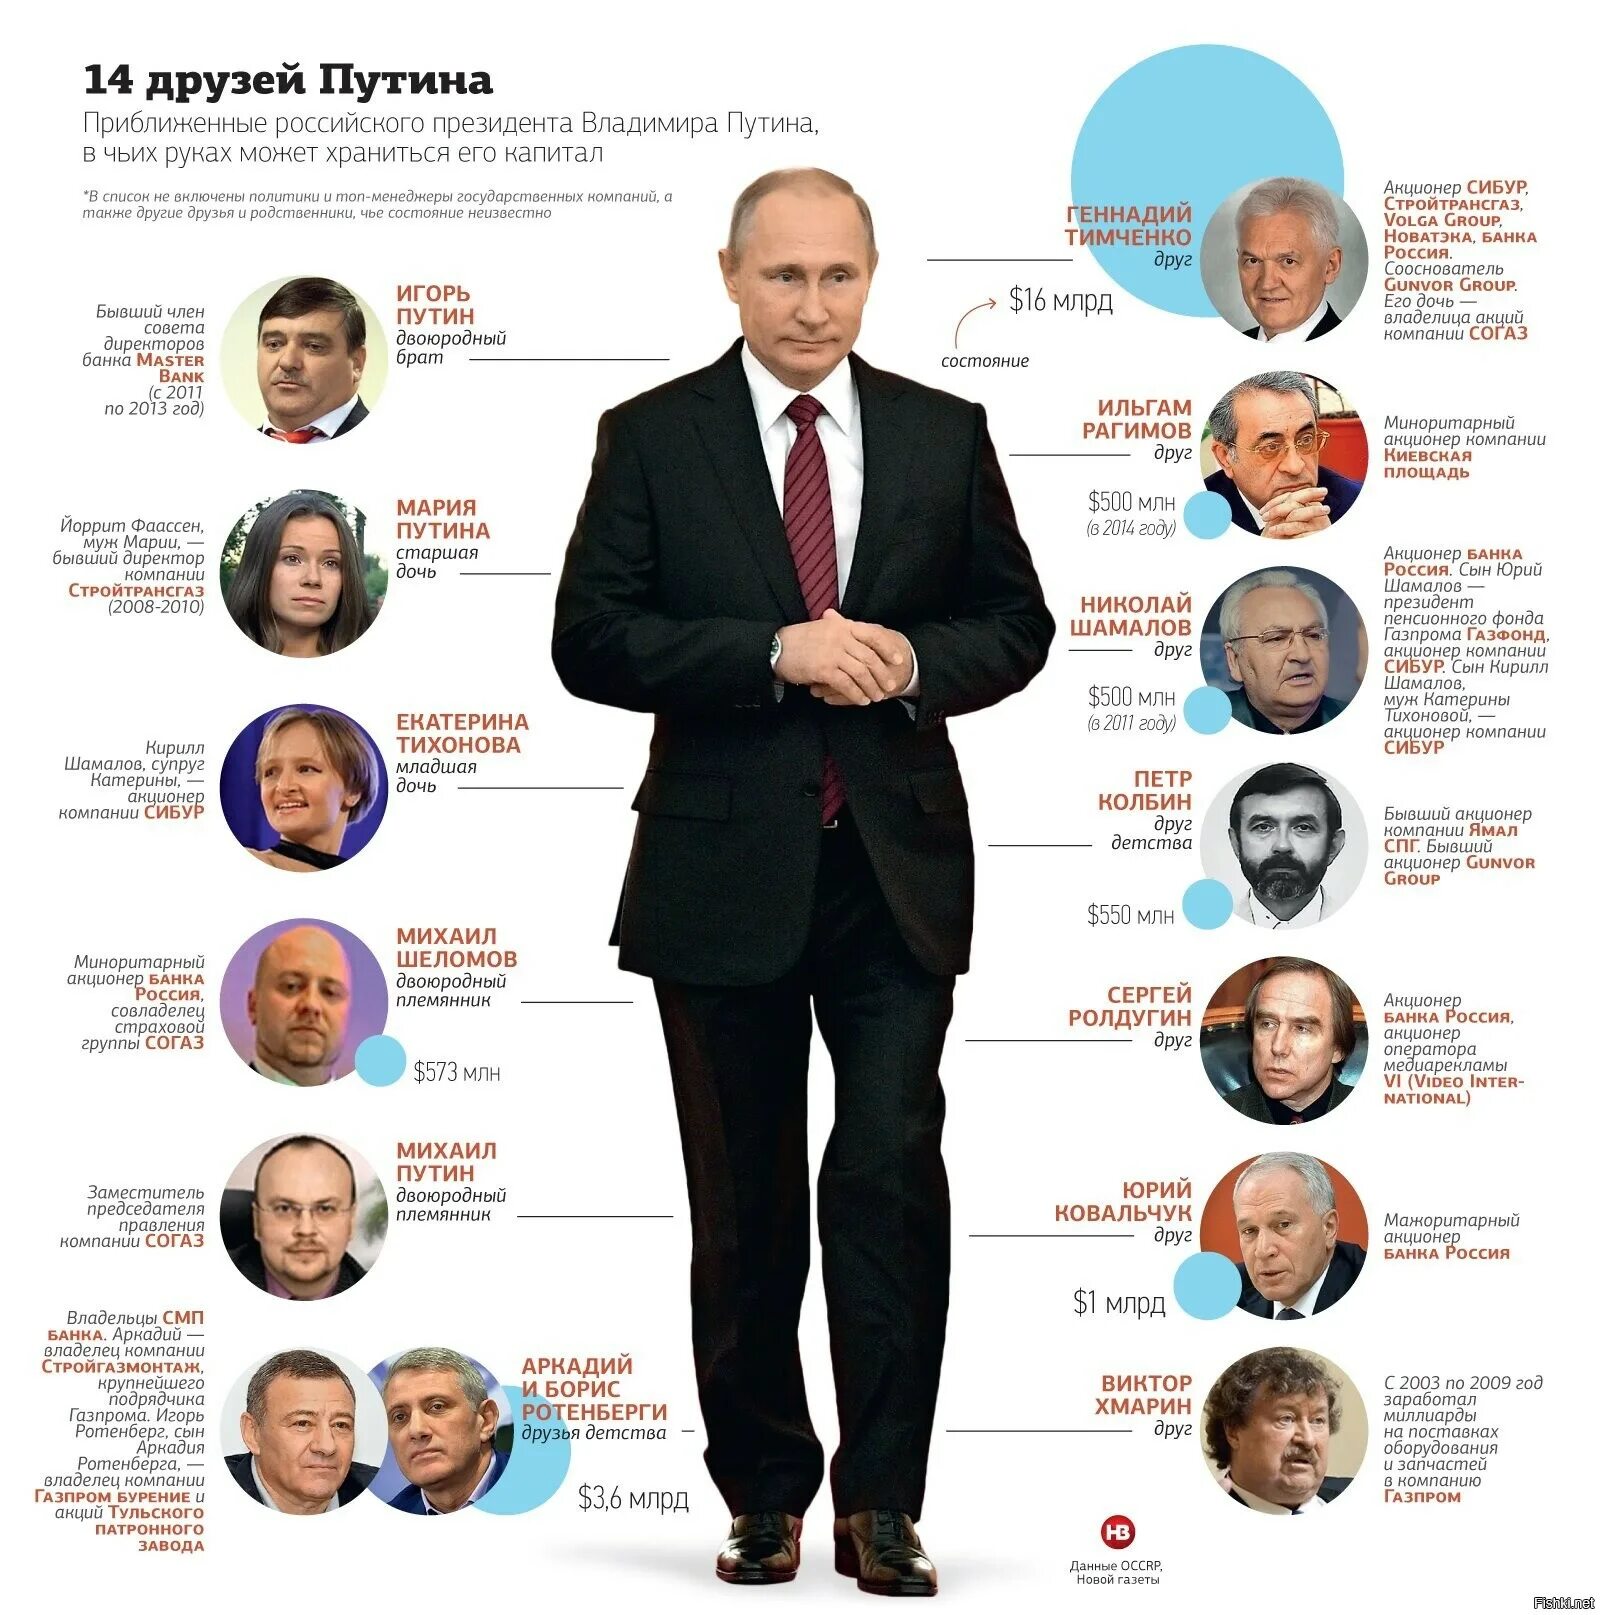 Друзья Путина во власти. Окружение Путина фамилии. Друзья Путина миллиардеры. Родственники Путина.